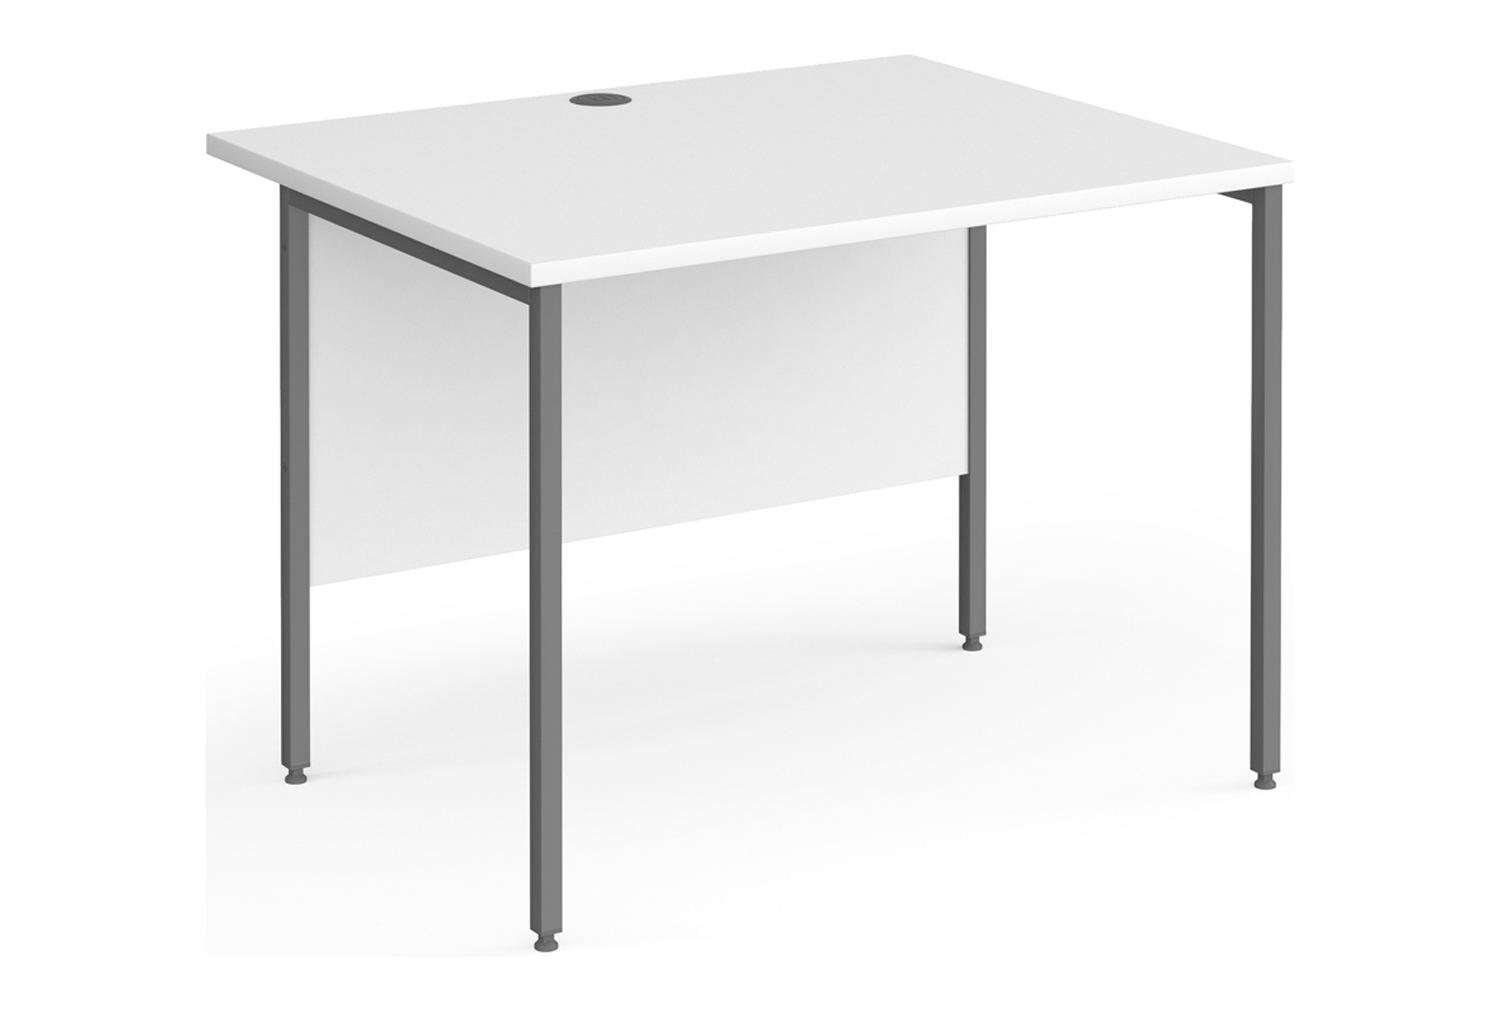 Value Line Classic+ Rectangular H-Leg Office Desk (Graphite Leg), 100wx80dx73h (cm), White, Express Delivery